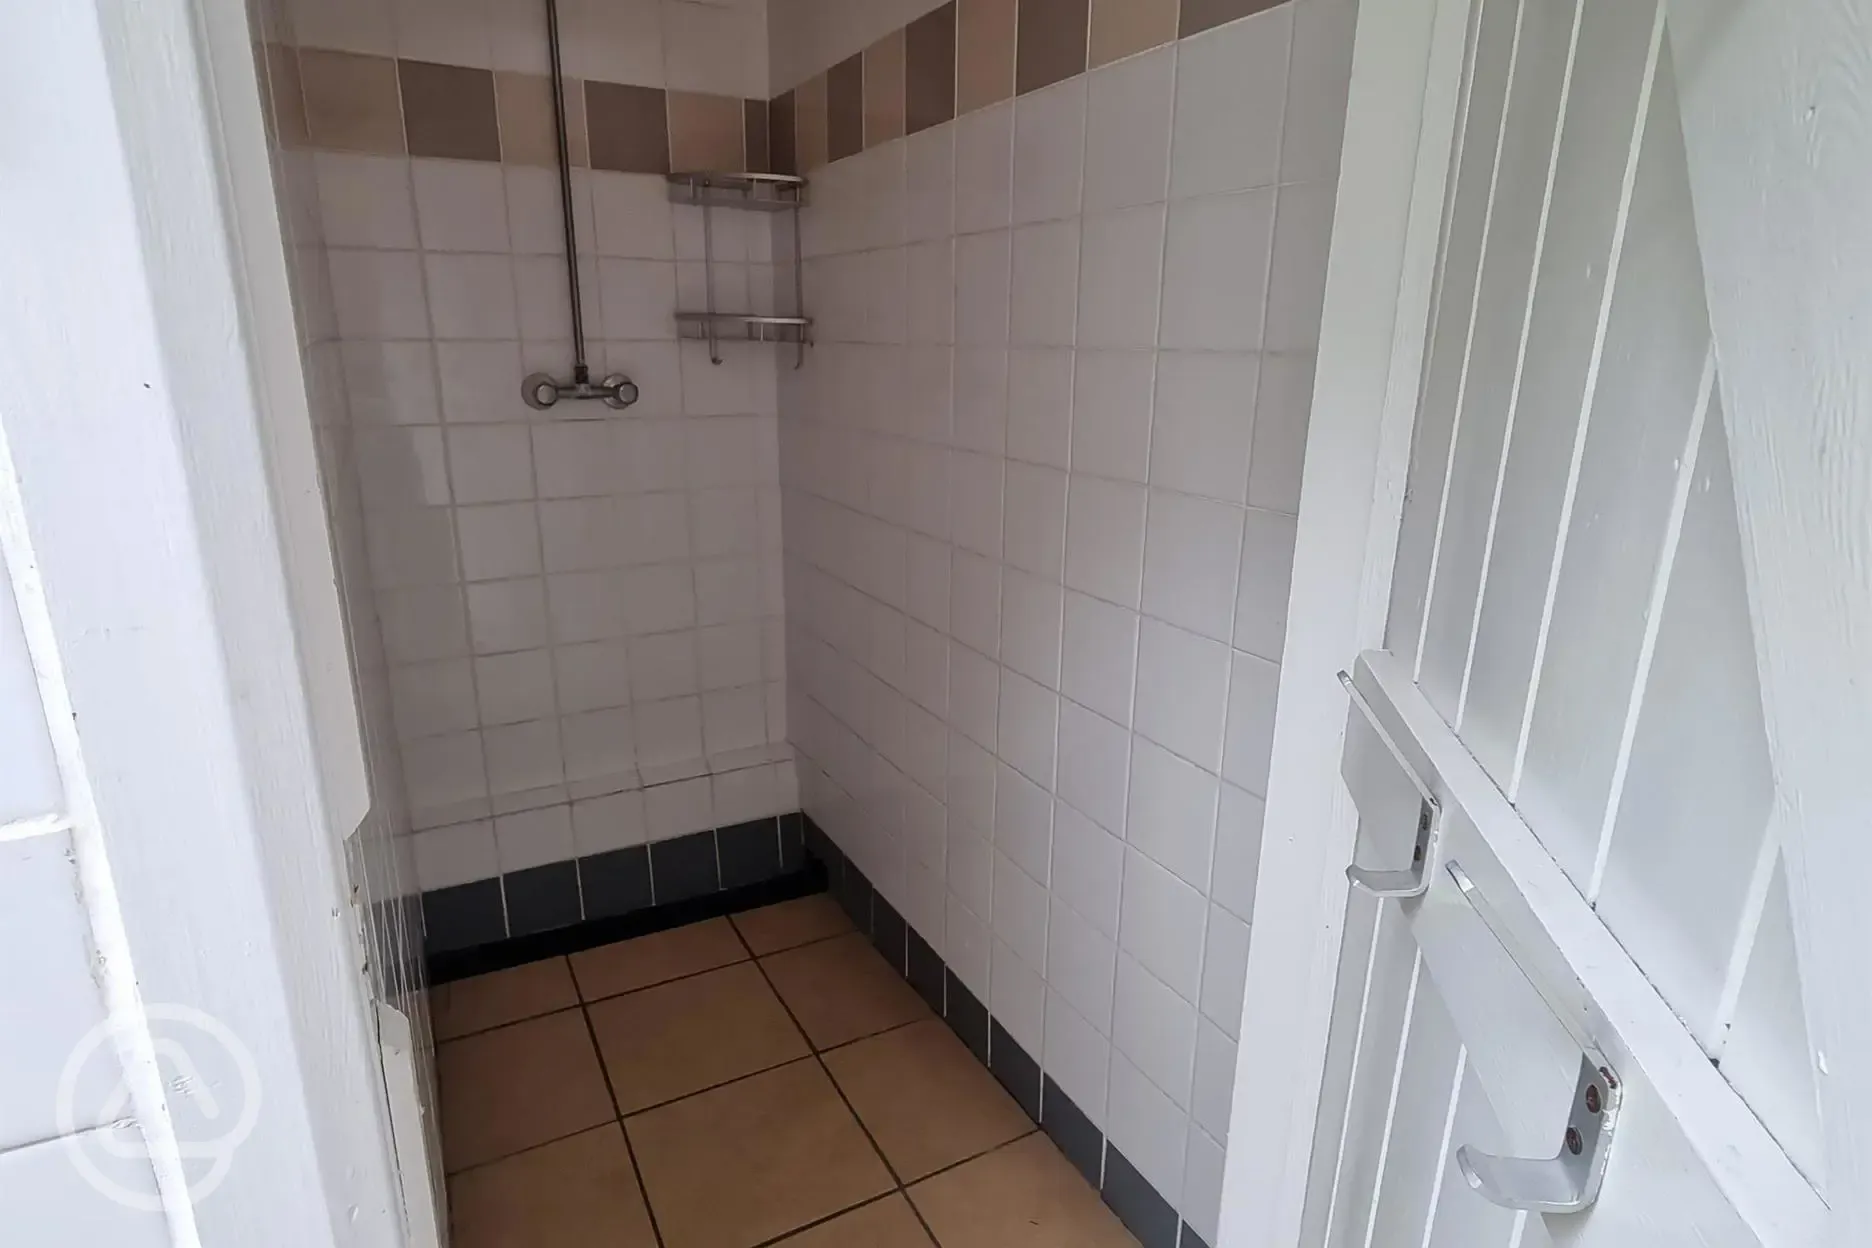 Shower facilities